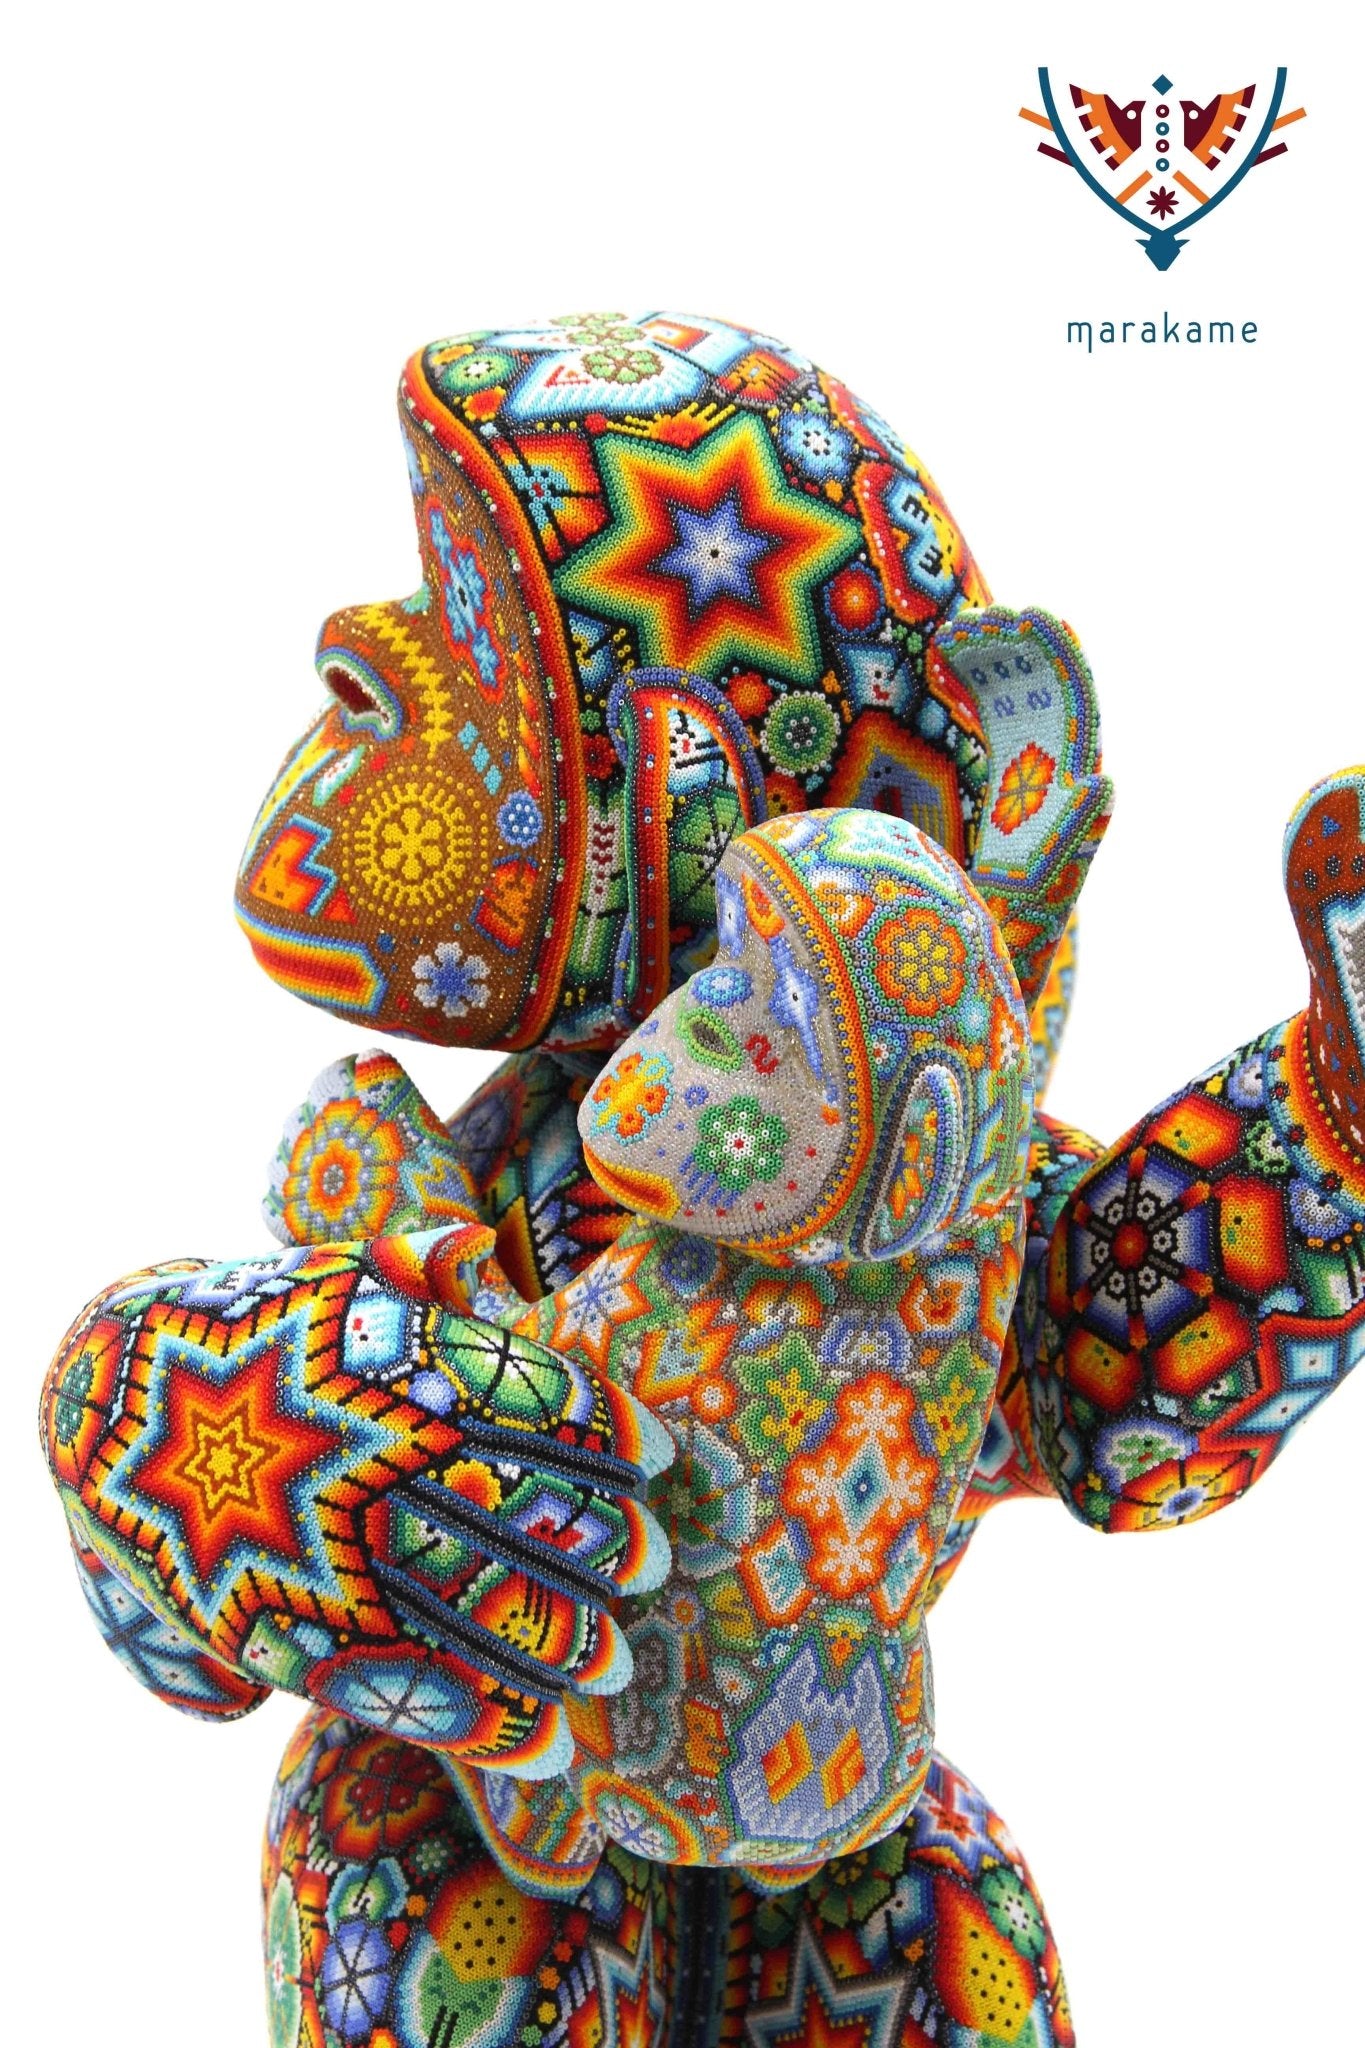 Copal Chango Skulptur mit Baby - Yurienaka - Huichol Kunst - Marakame